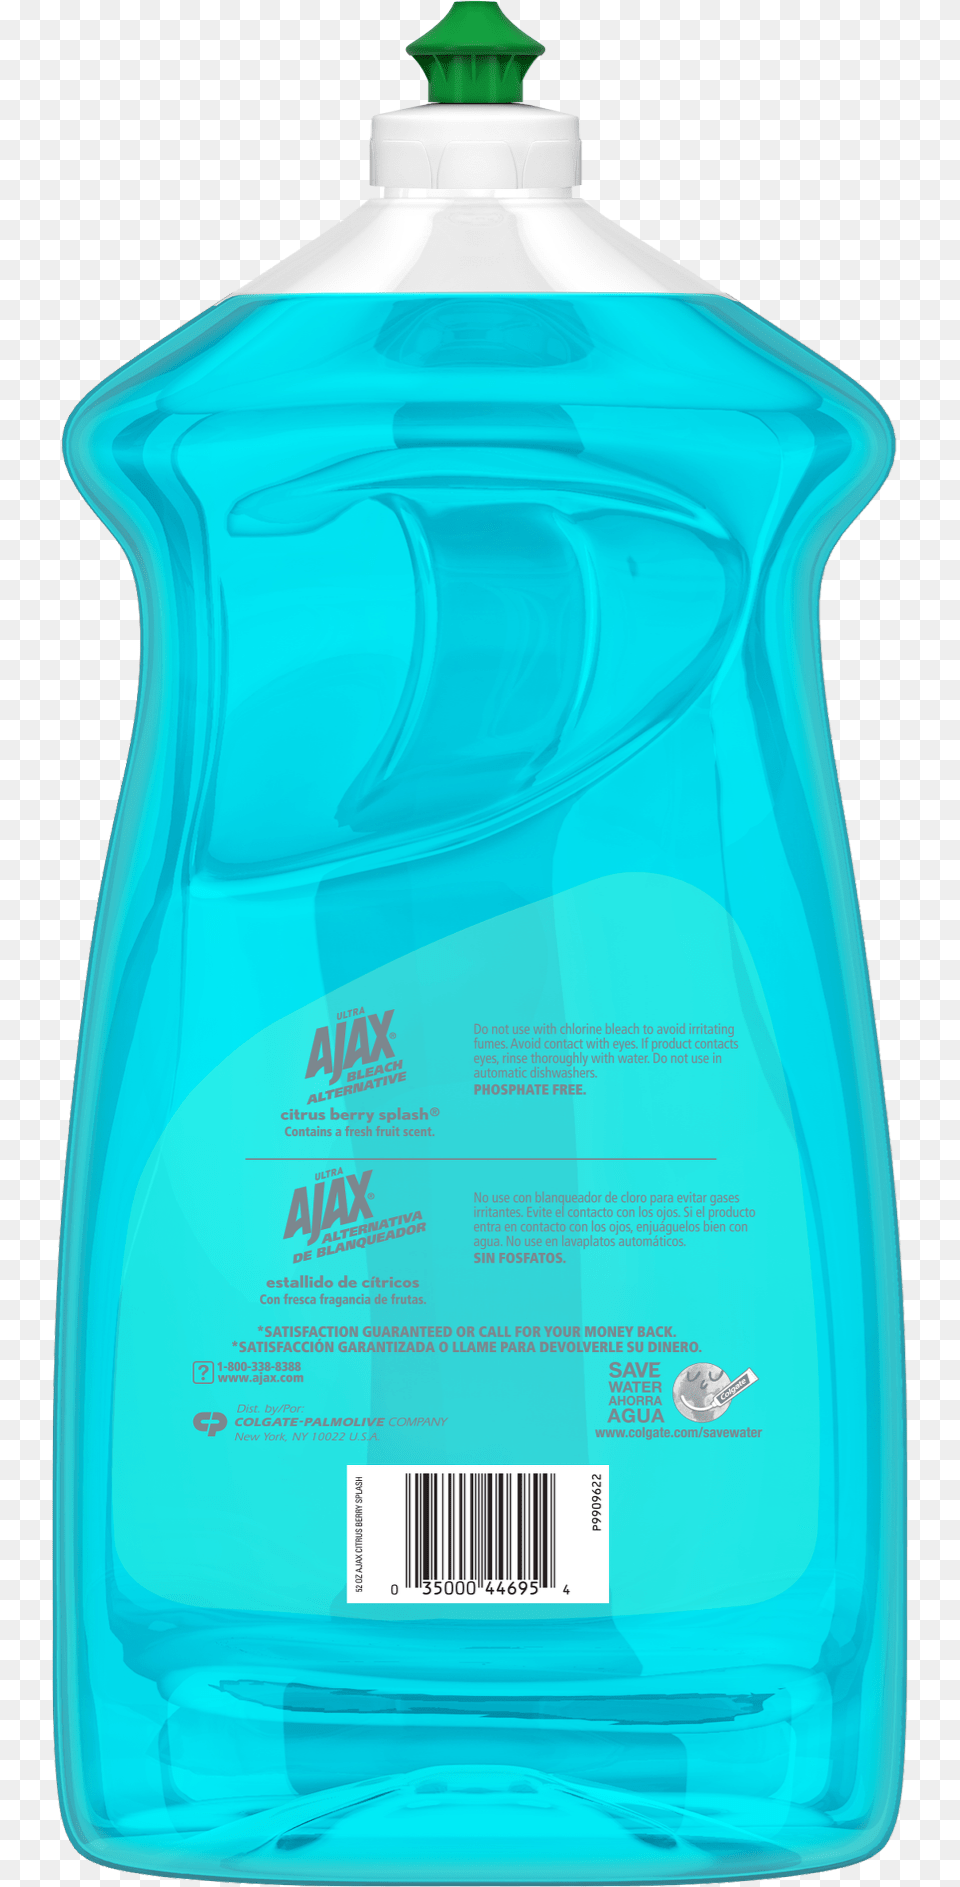 Ajax Ultra Triple Action Liquid Dish Soap Bleach Alternative Dry Suit, Bottle, Cosmetics, Perfume Free Png